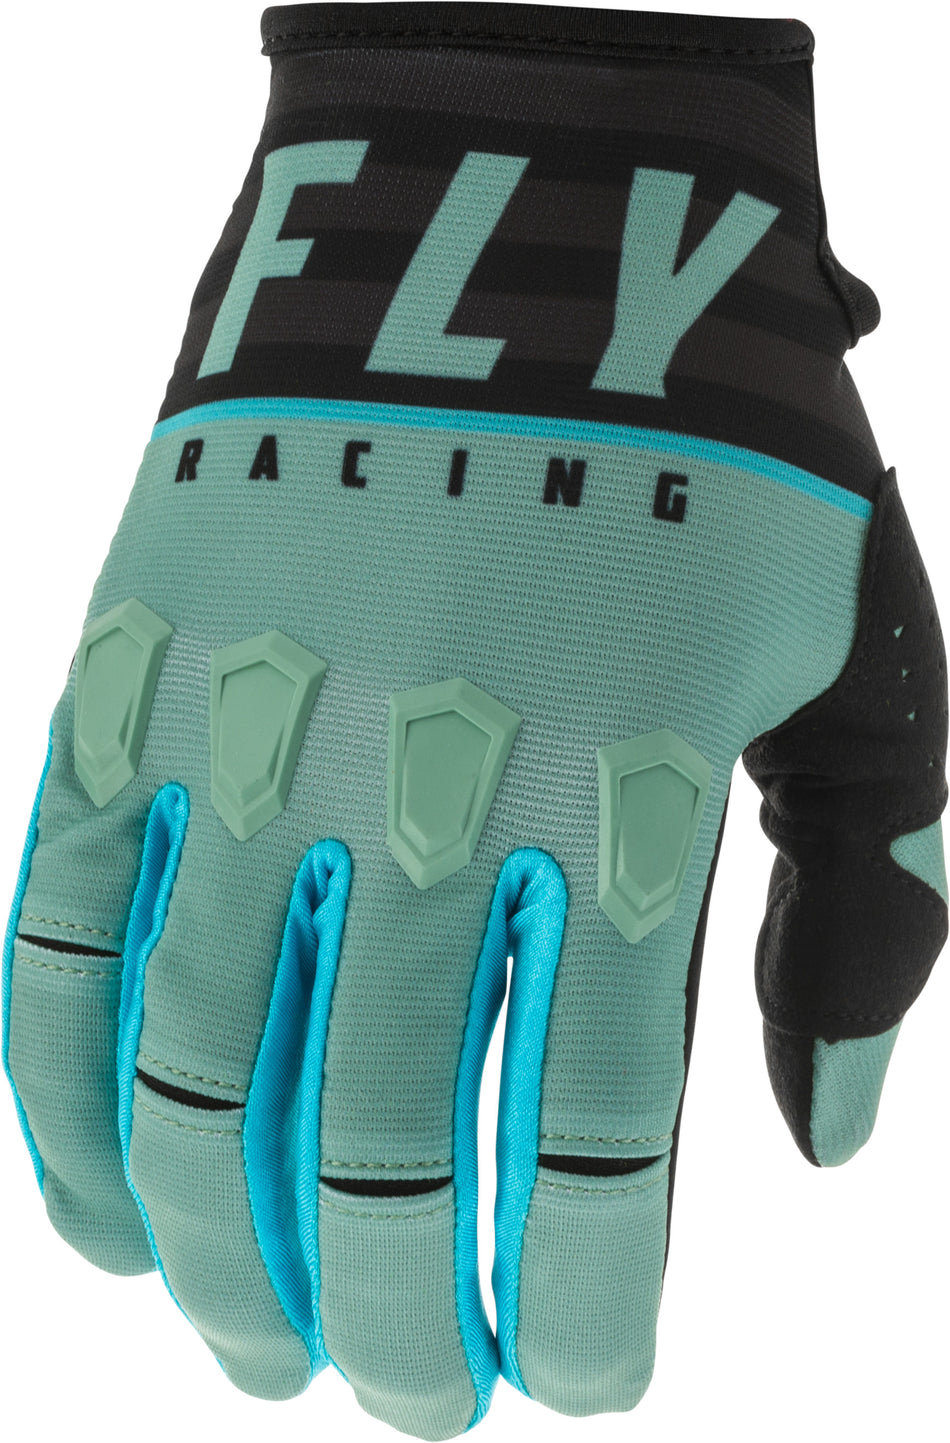 FLY RACING Kinetic K120 Gloves Sage Green/Black Sz 13 373-41613